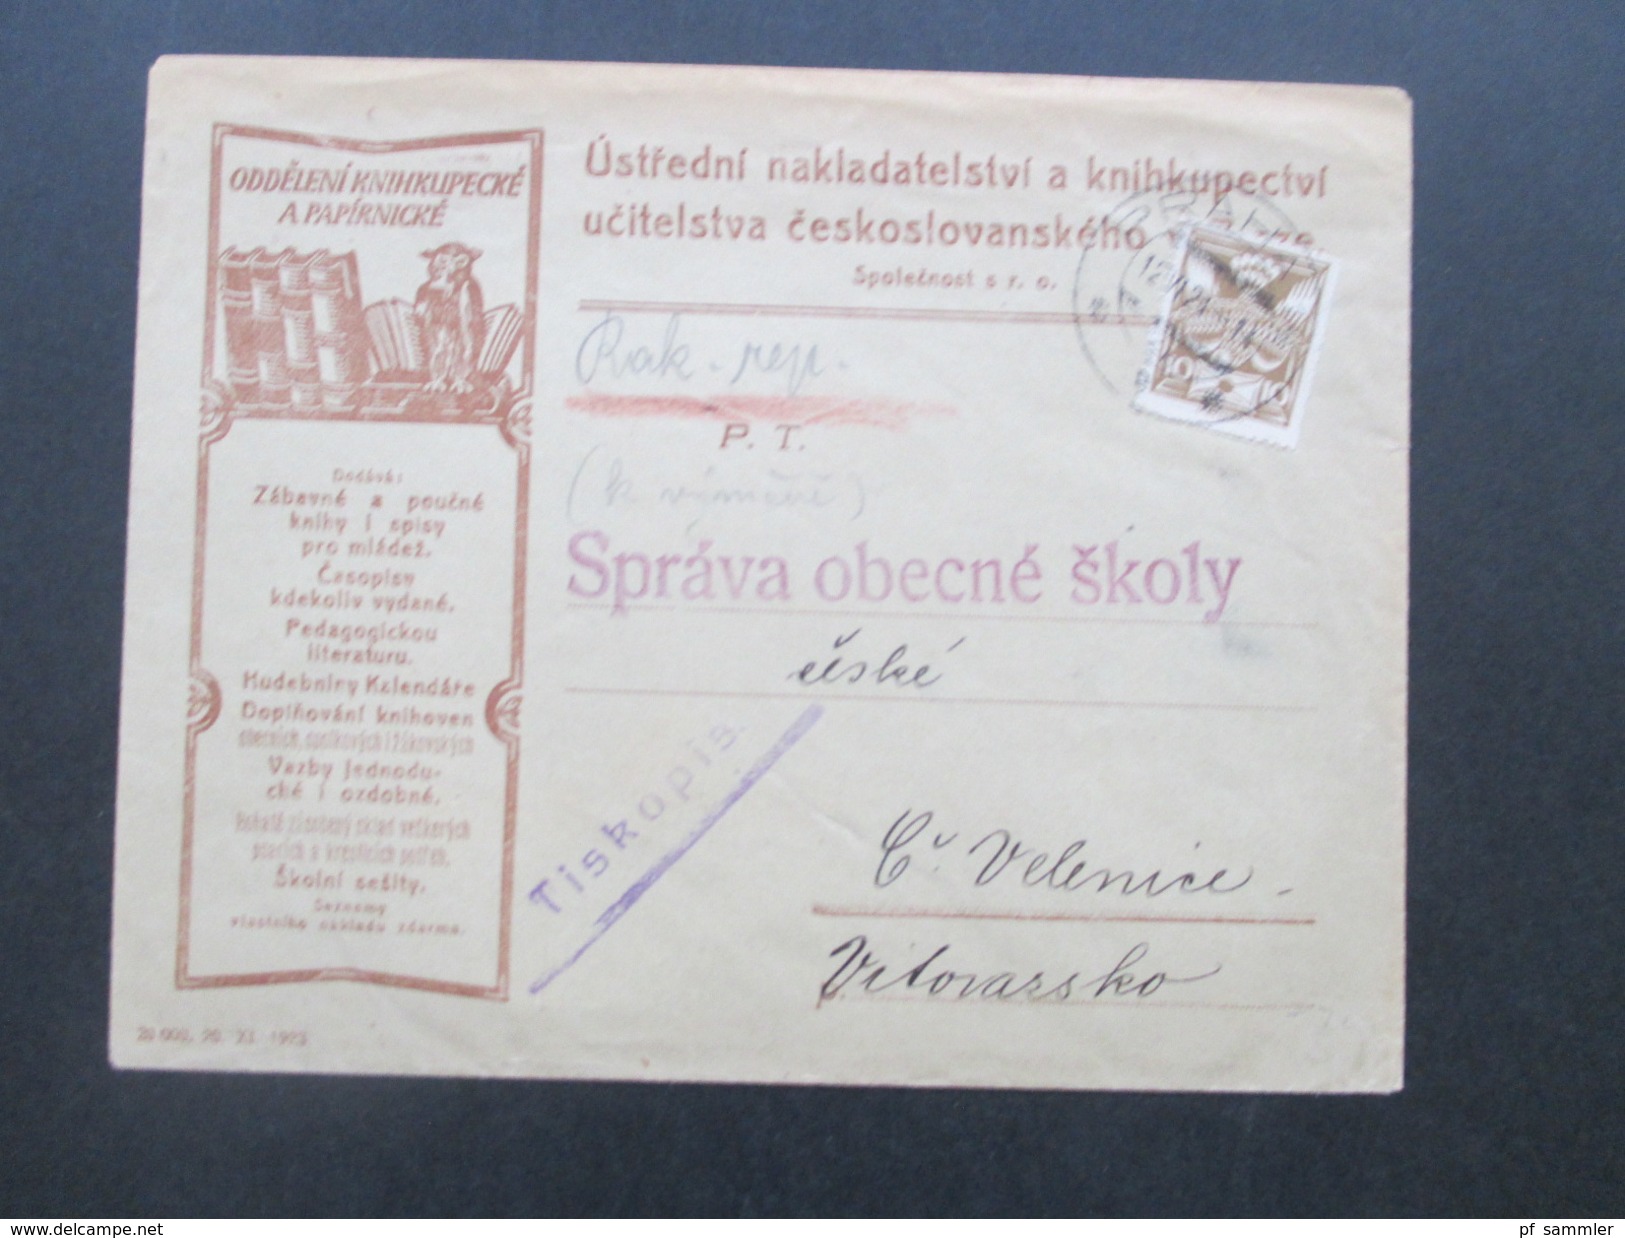 Tschechoslowakei 1924 Tiskopis. Oddeleni Knihkupecke A Papirnicke. Eule / Bücher. Buchhandlung?! - Covers & Documents